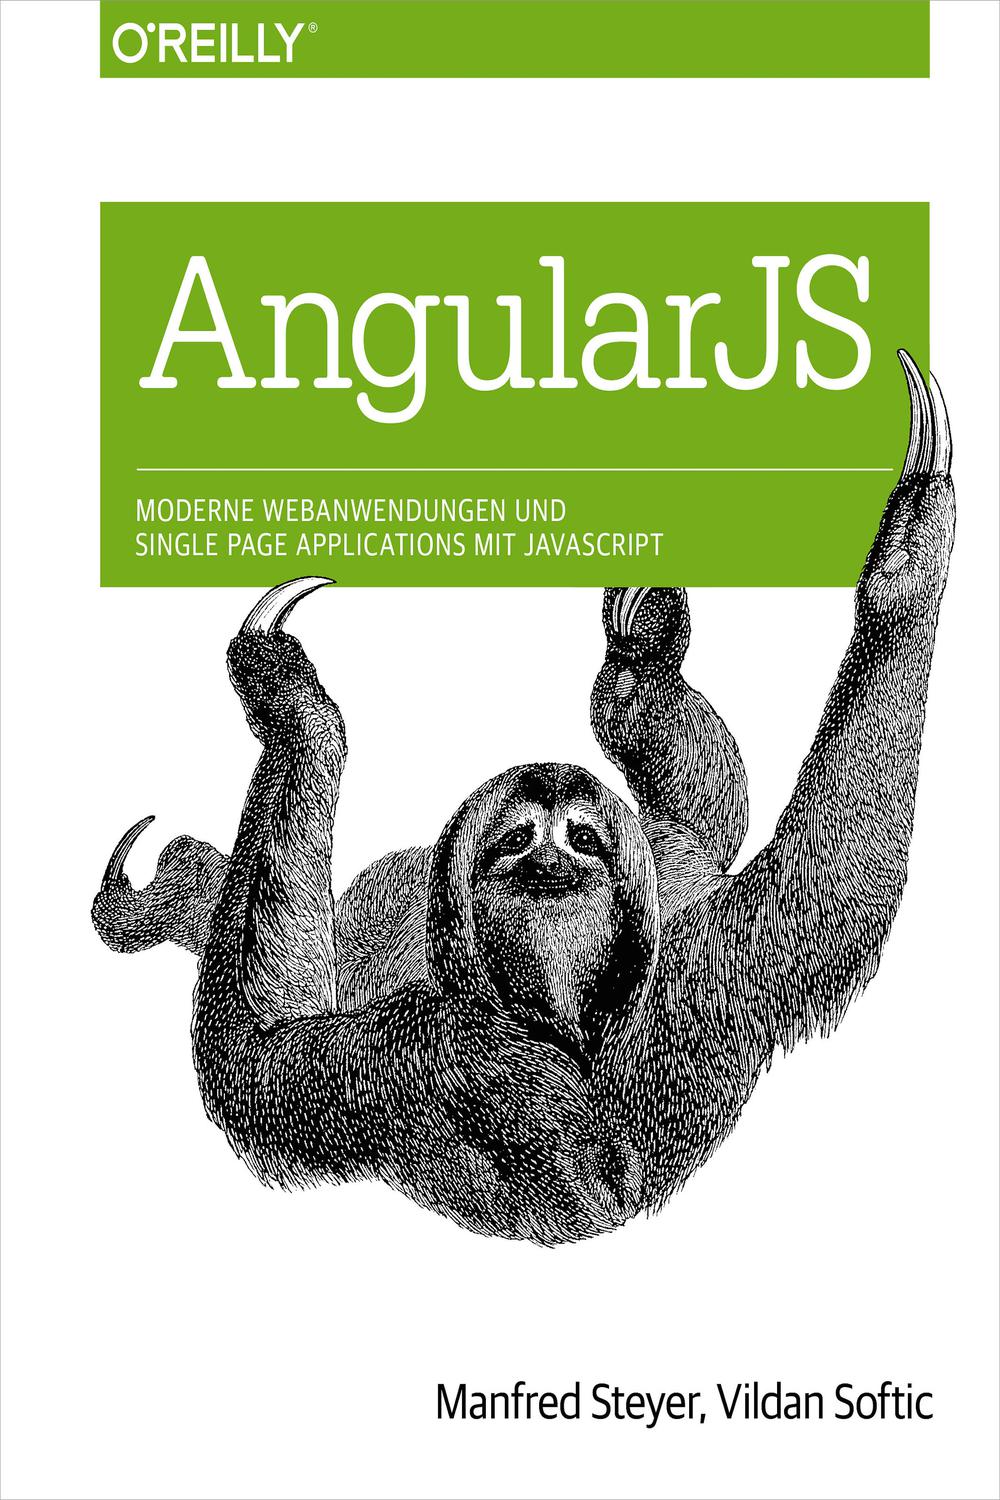 Angular JS: Moderne Webanwendungen und Single Page Applications mit JavaScript - Manfred Steyer, Vildan Softic